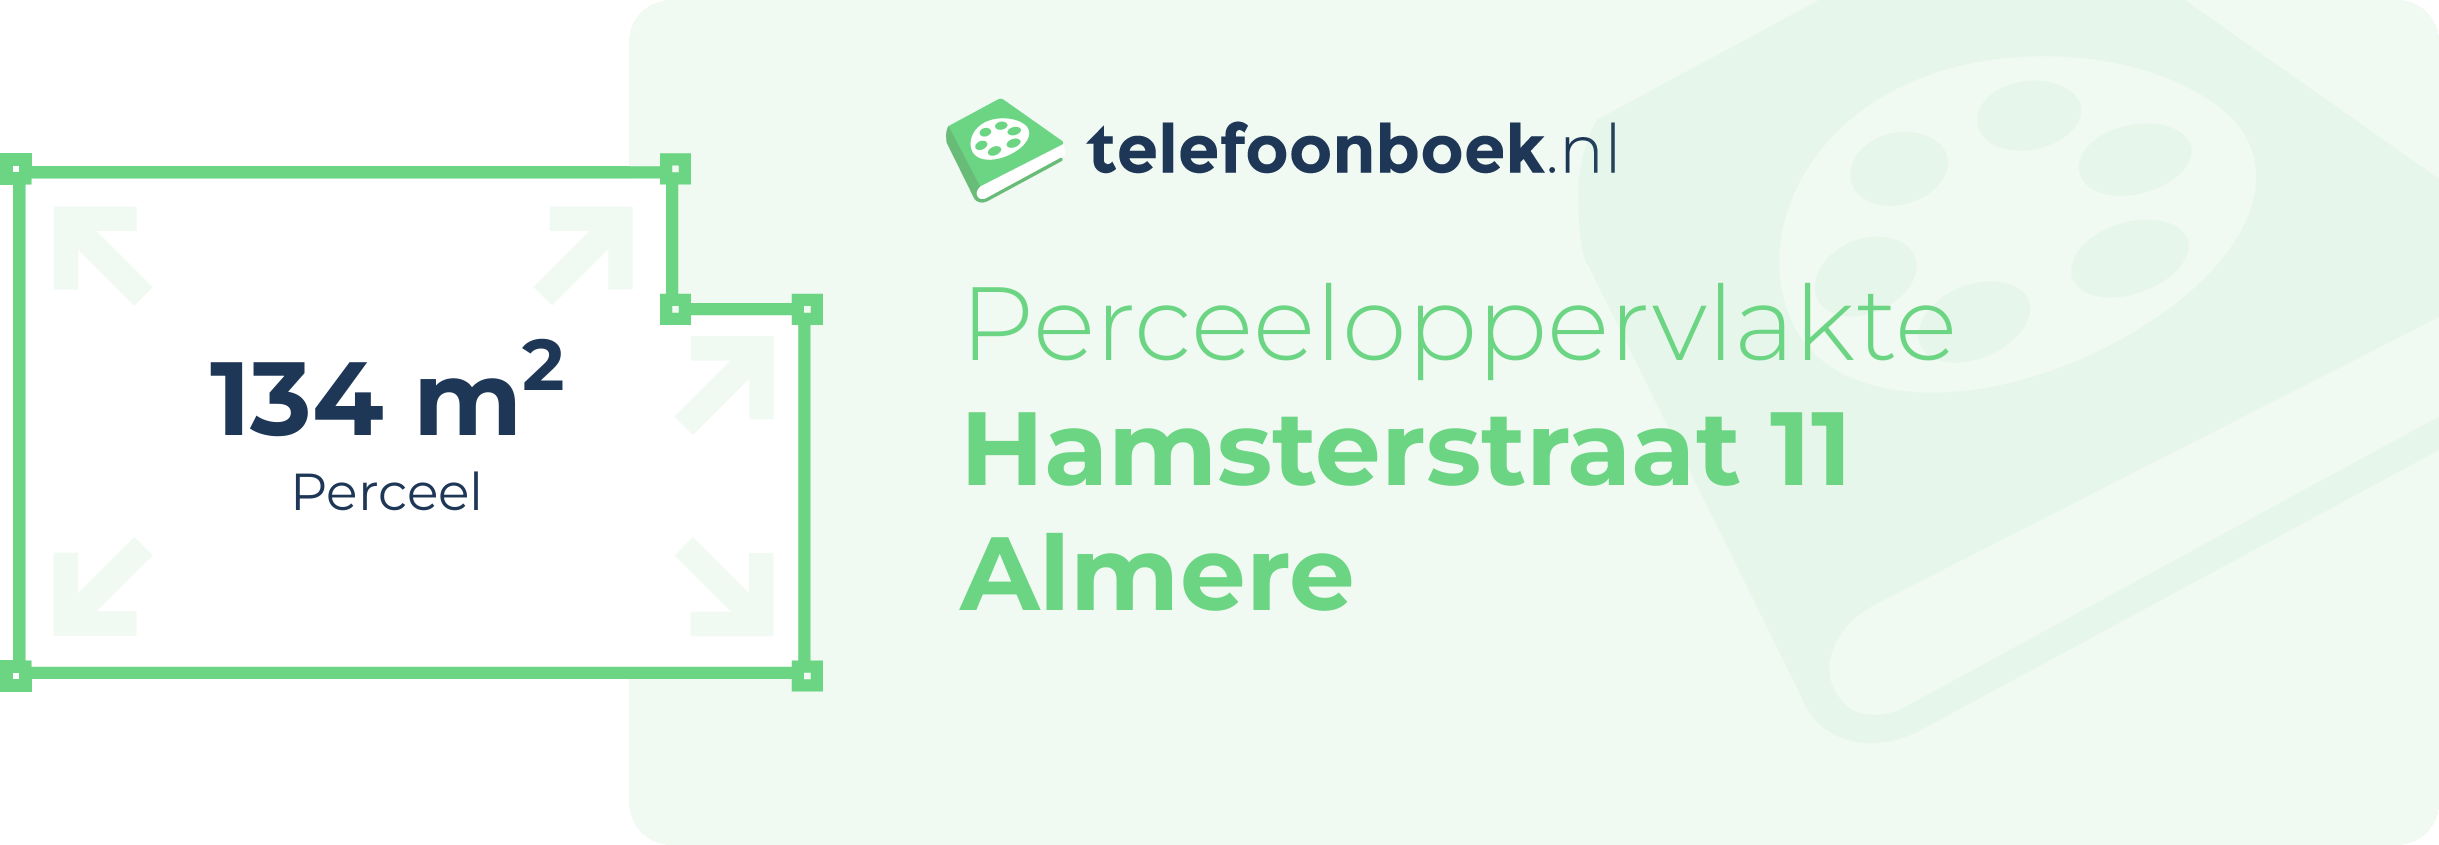 Perceeloppervlakte Hamsterstraat 11 Almere